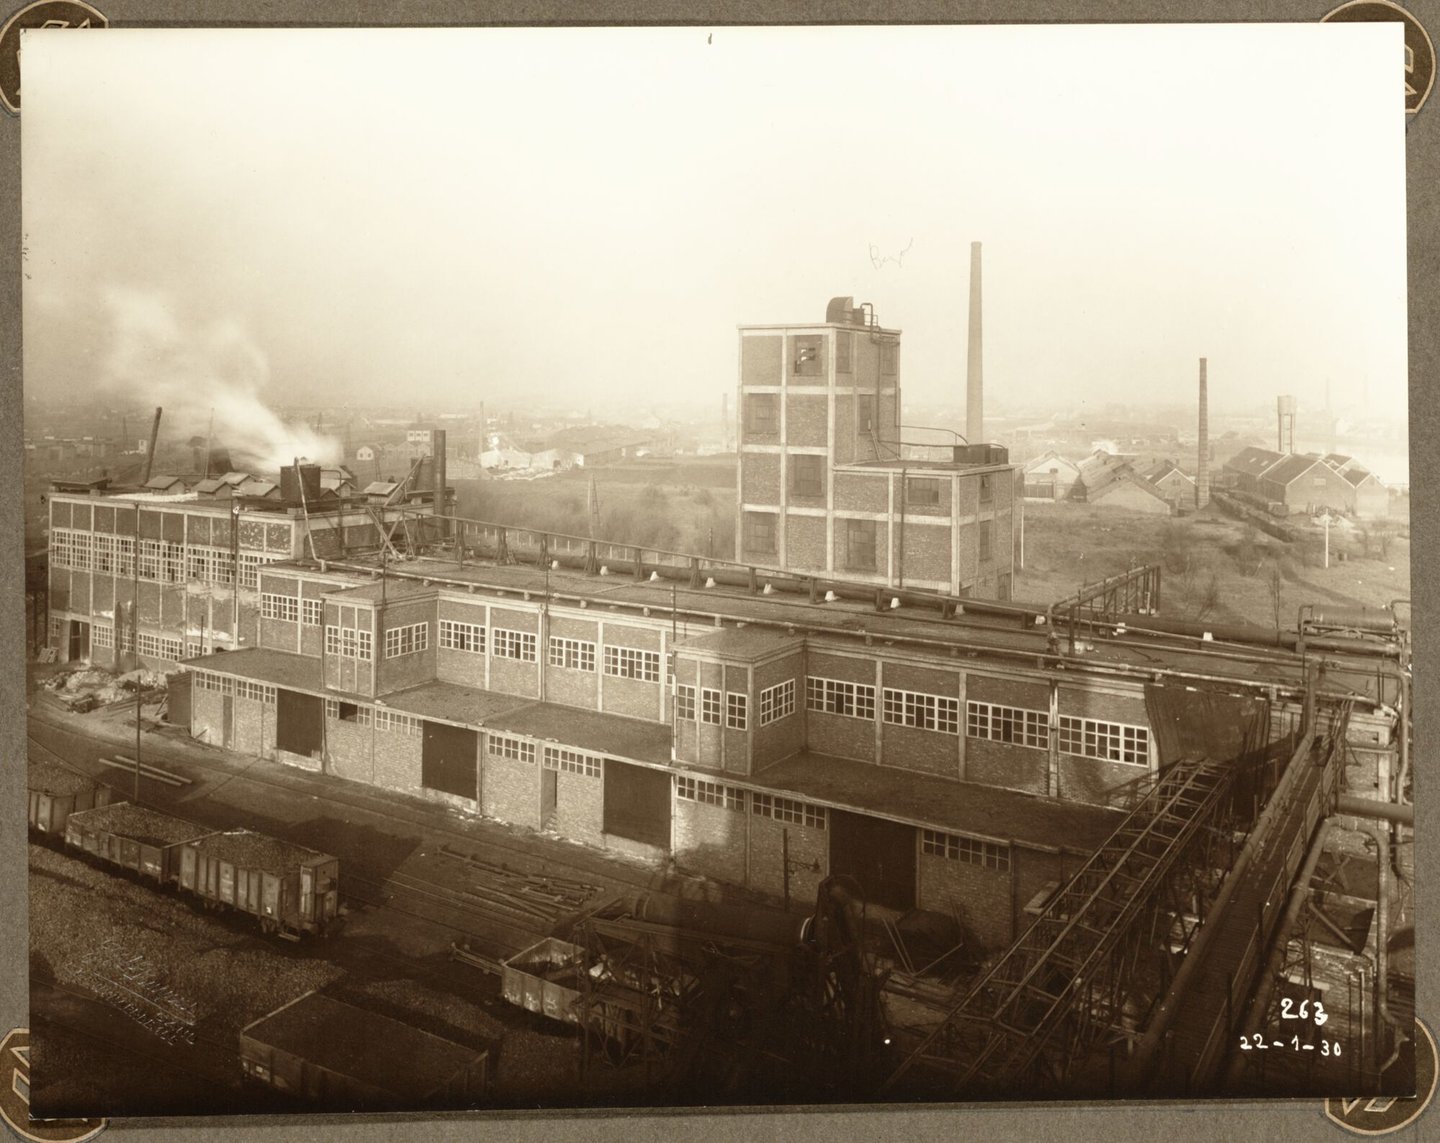 Zwavelzuurfabriek van cokesfabriek Kuhlmann in Zelzate